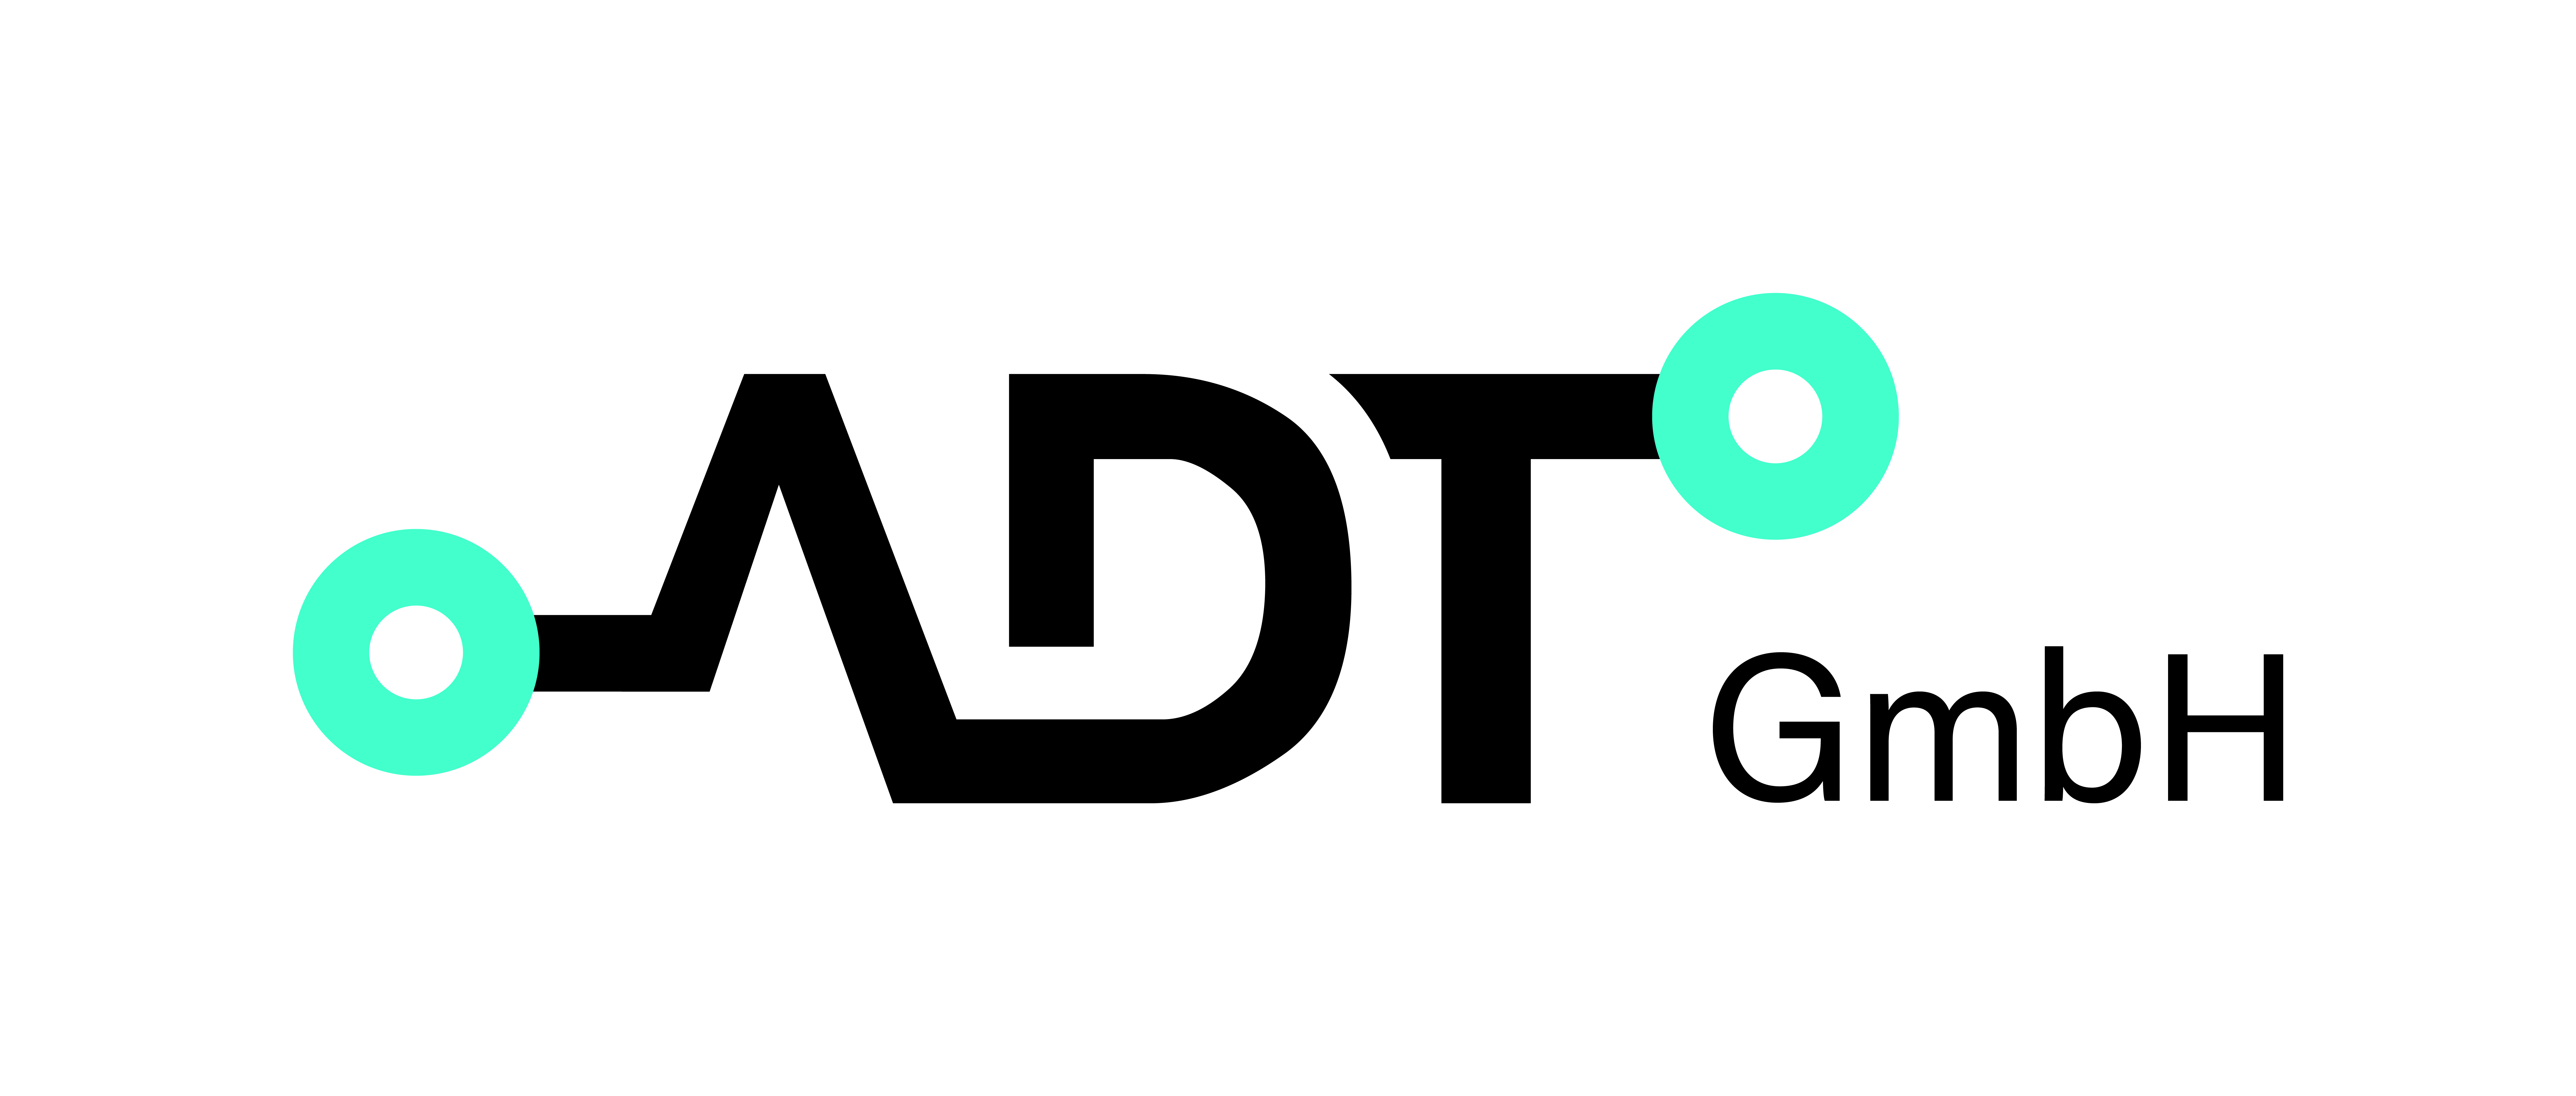 ADT GmbH logo